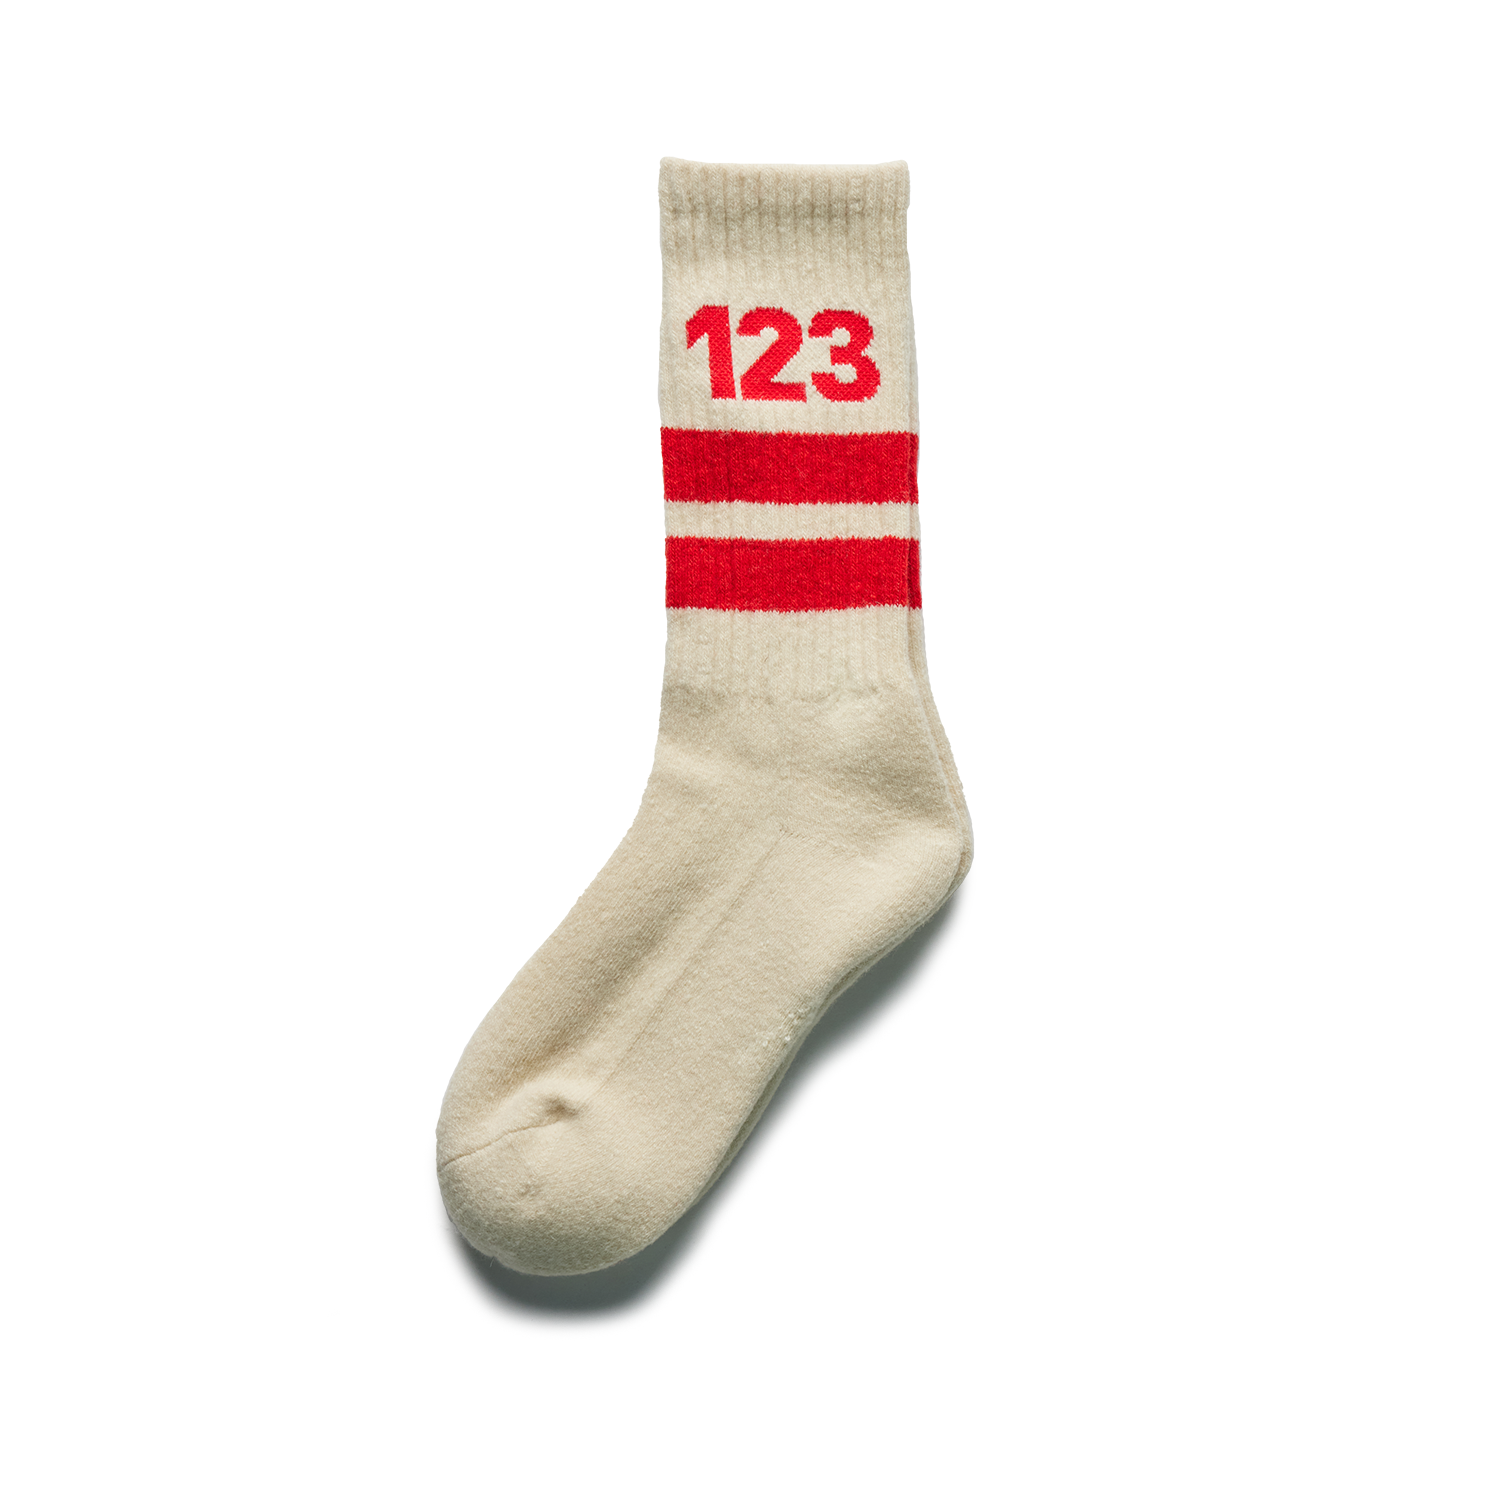 RRR123 - 123 Socks product image